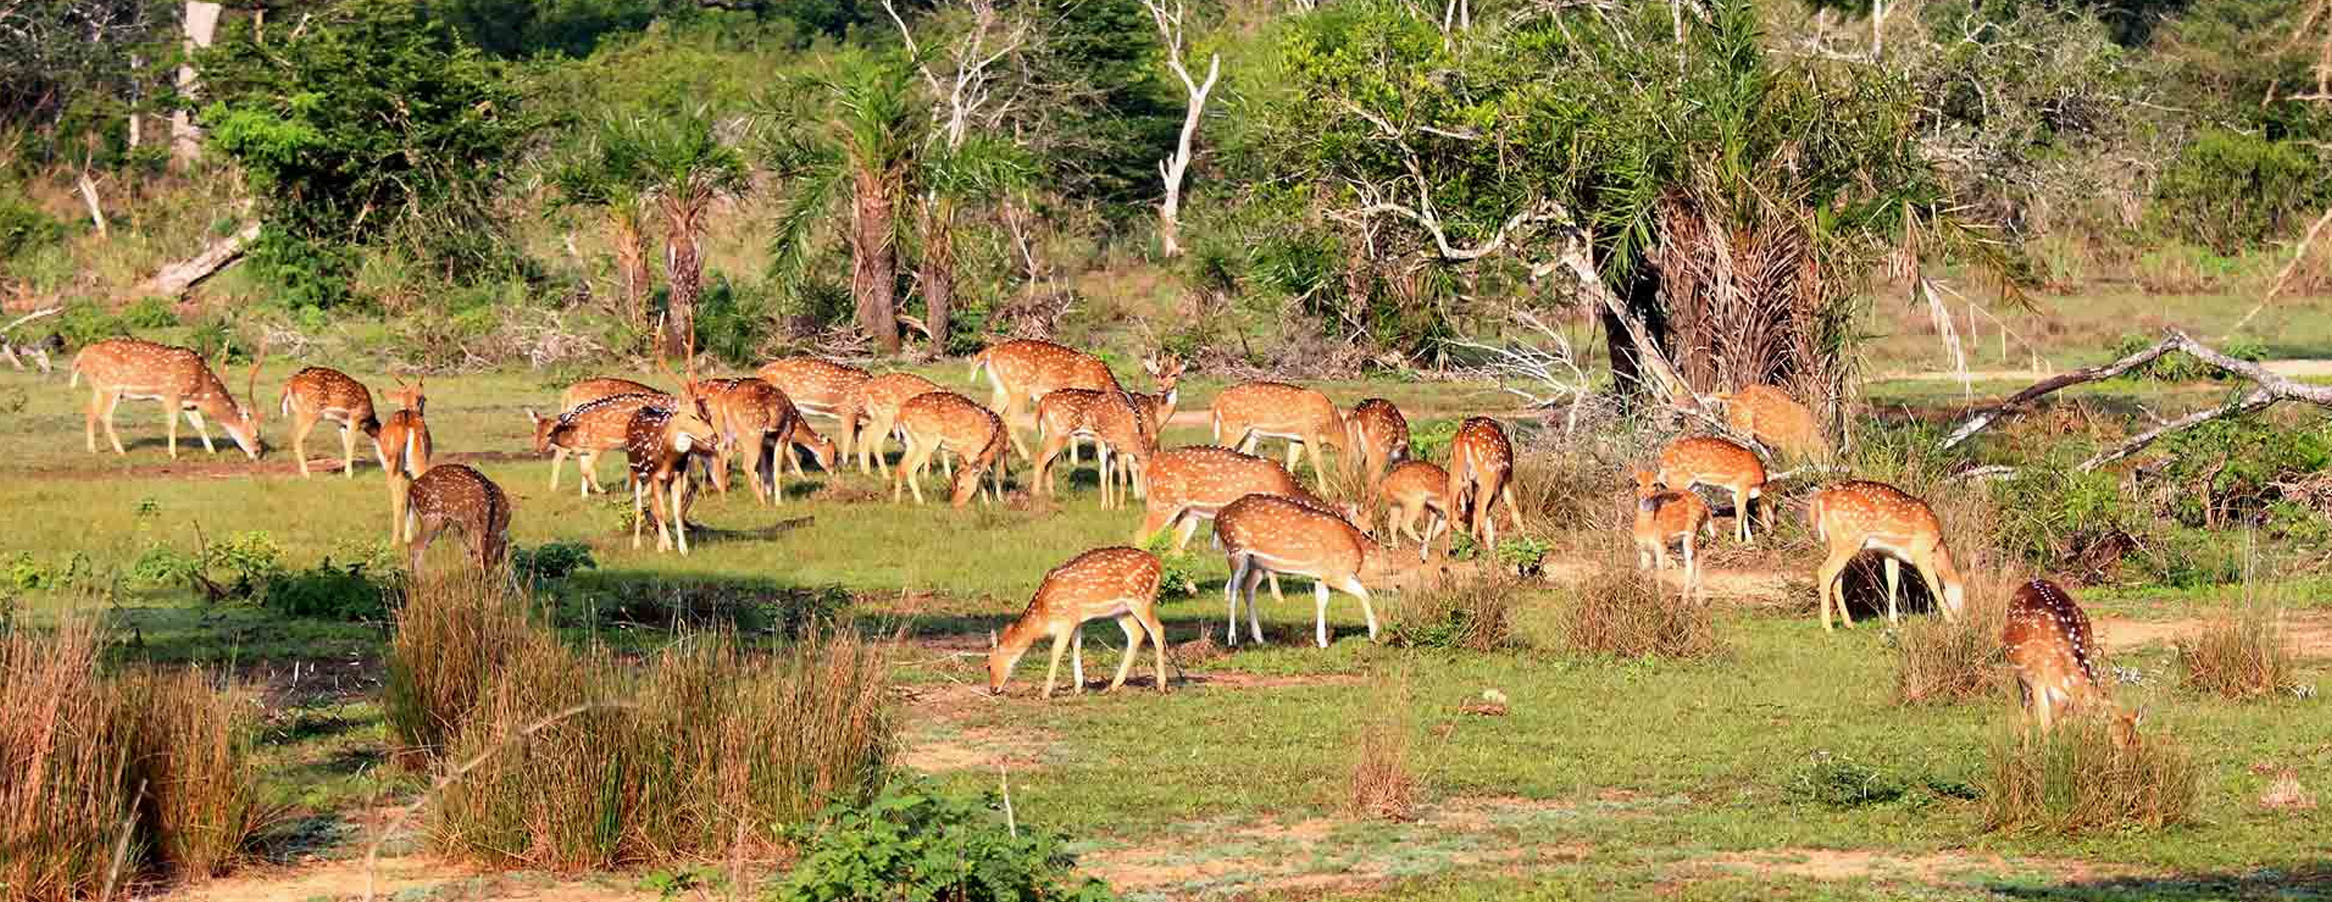 Wilpattu National Park Tour in Sri Lanka | Rock Lanka Tours